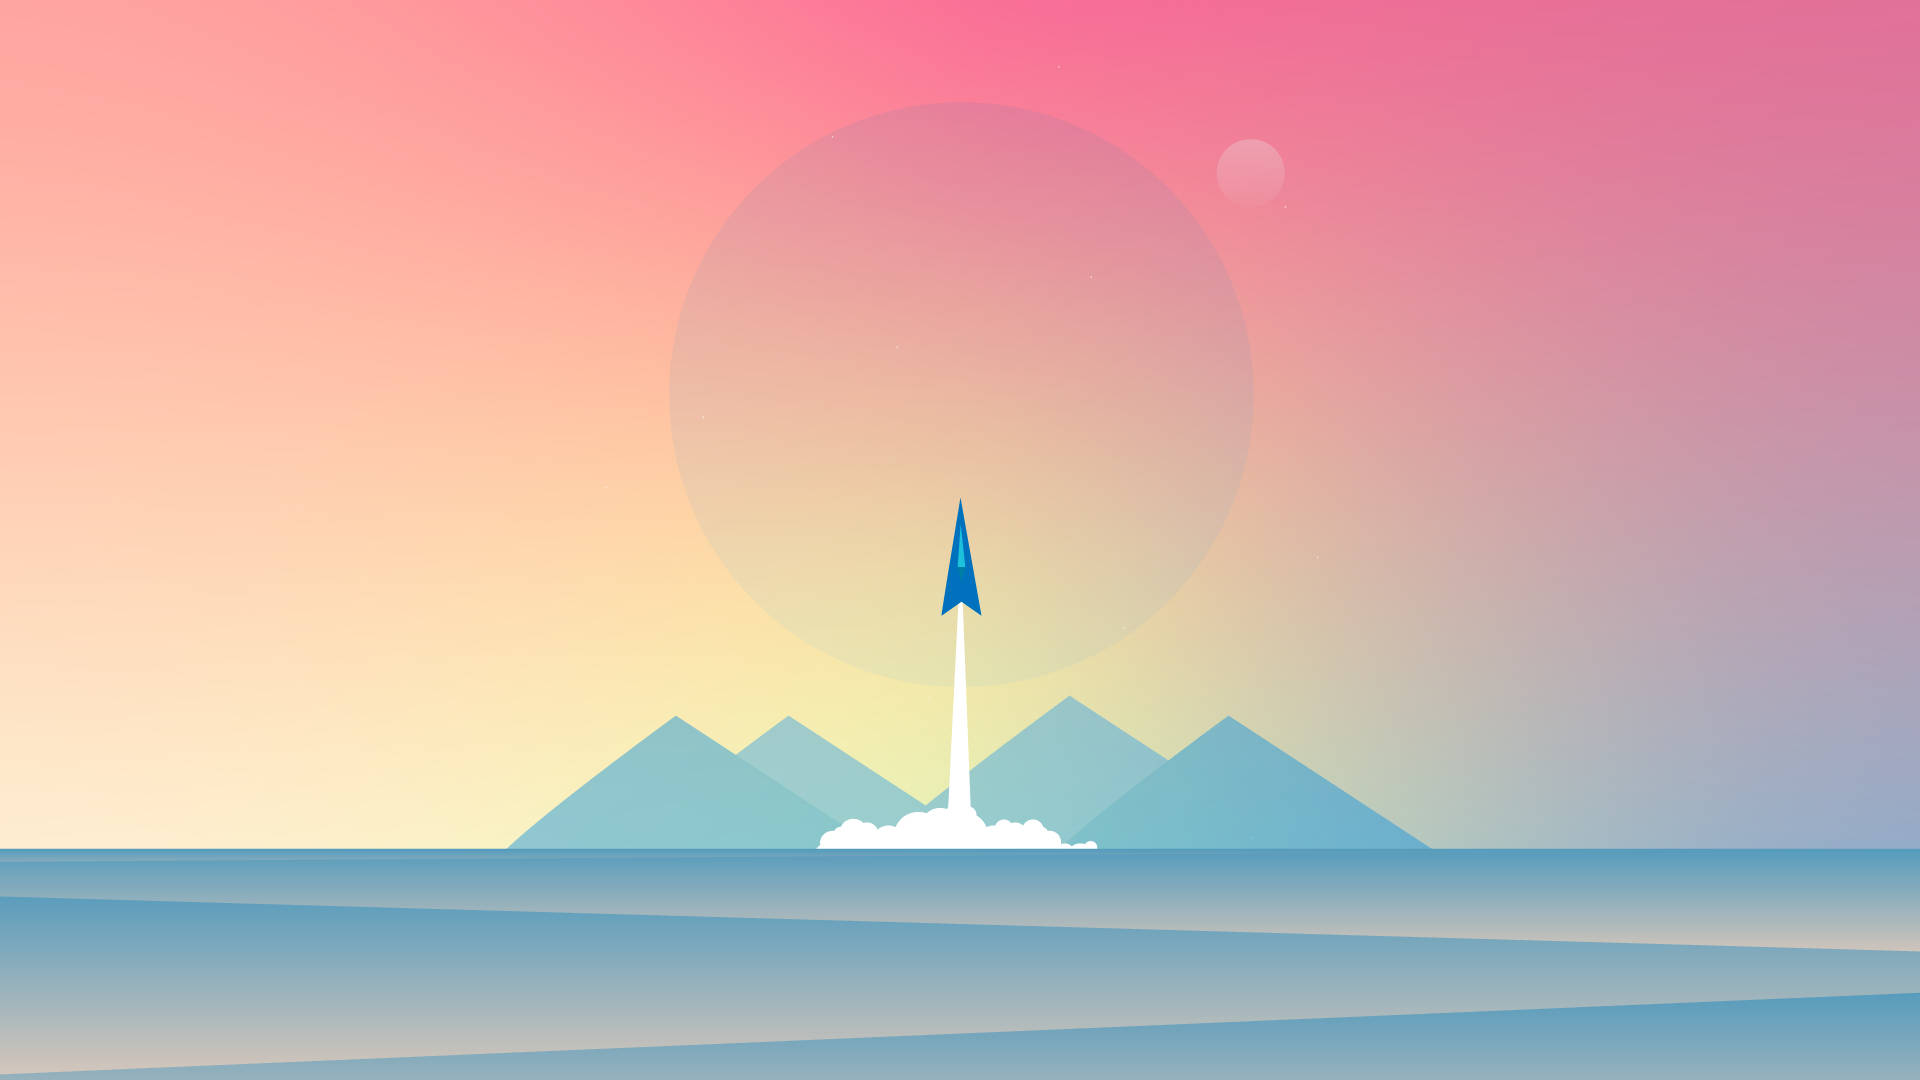 Rocket With Pyramids Digital Art Wallpaper